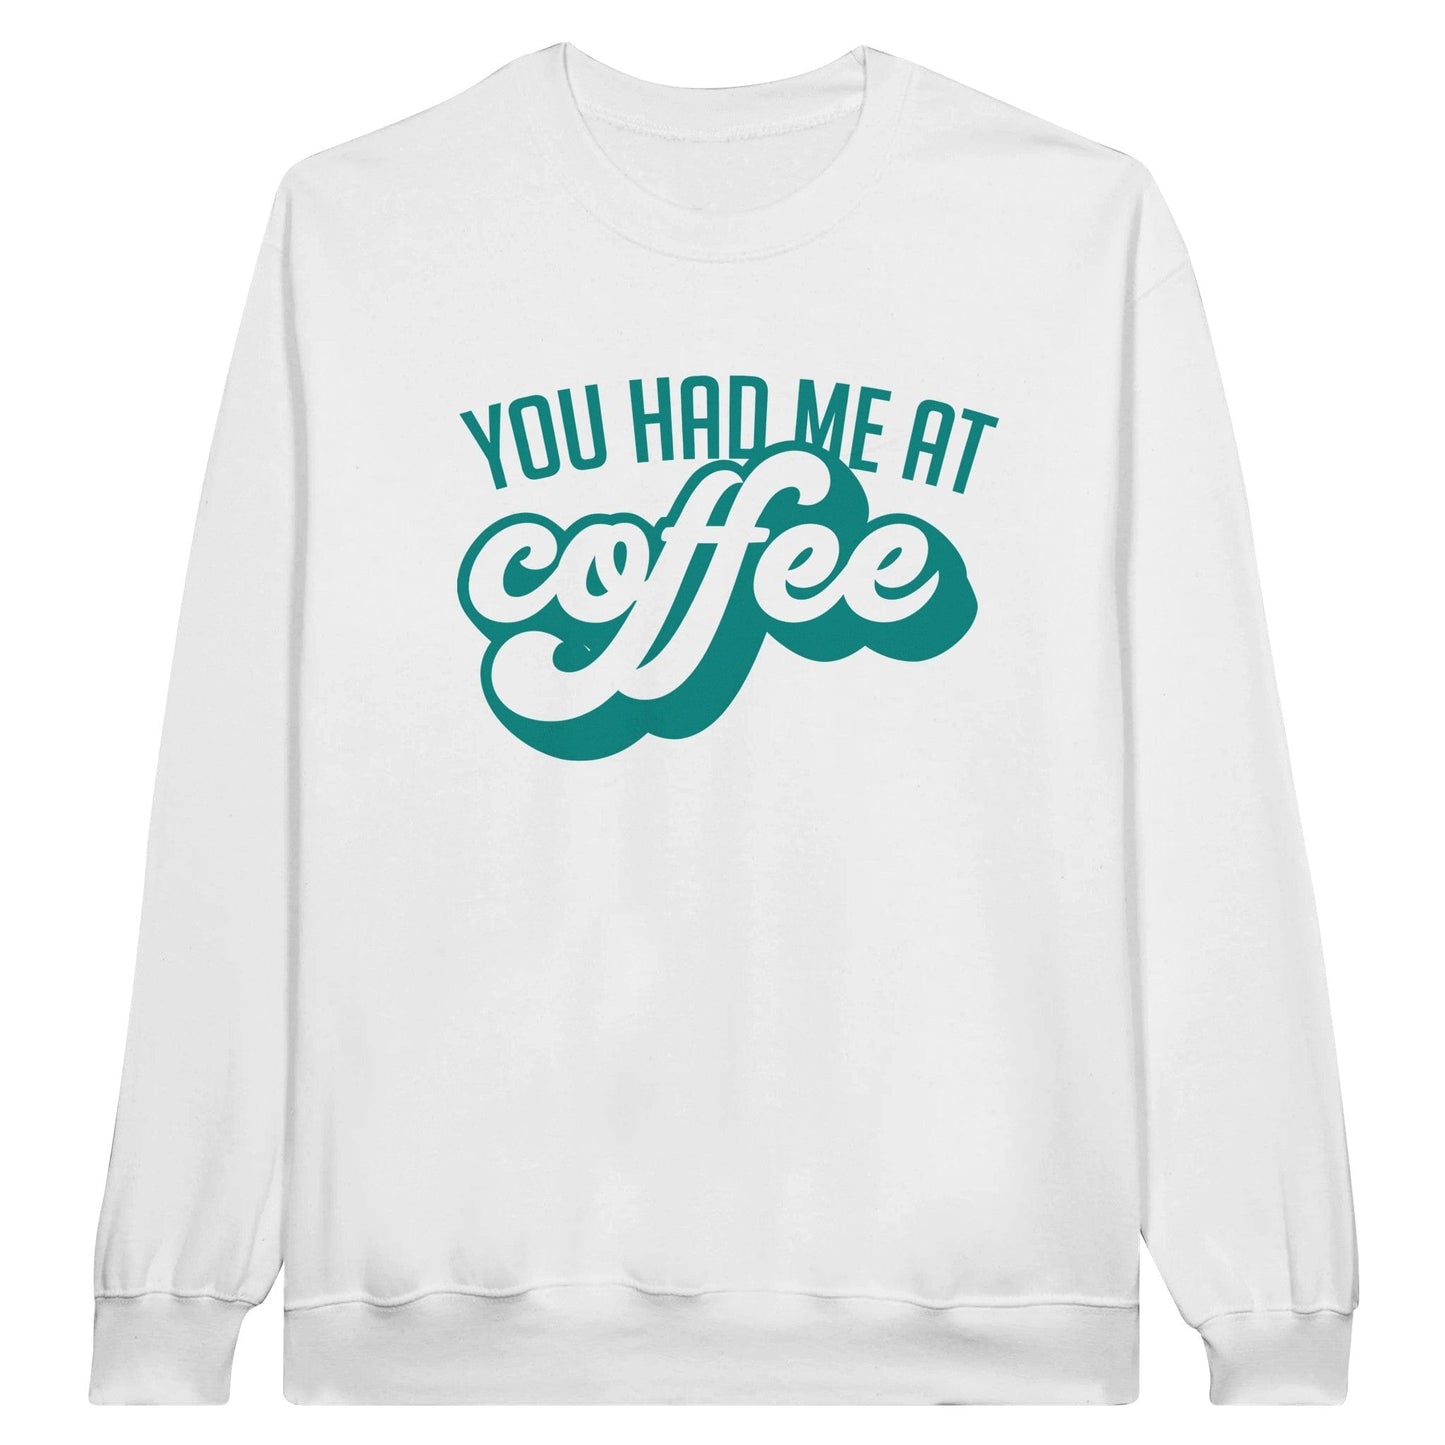 Good Bean Gifts "You Had Me at Coffee" - Classic Unisex Crewneck Sweatshirt White / M